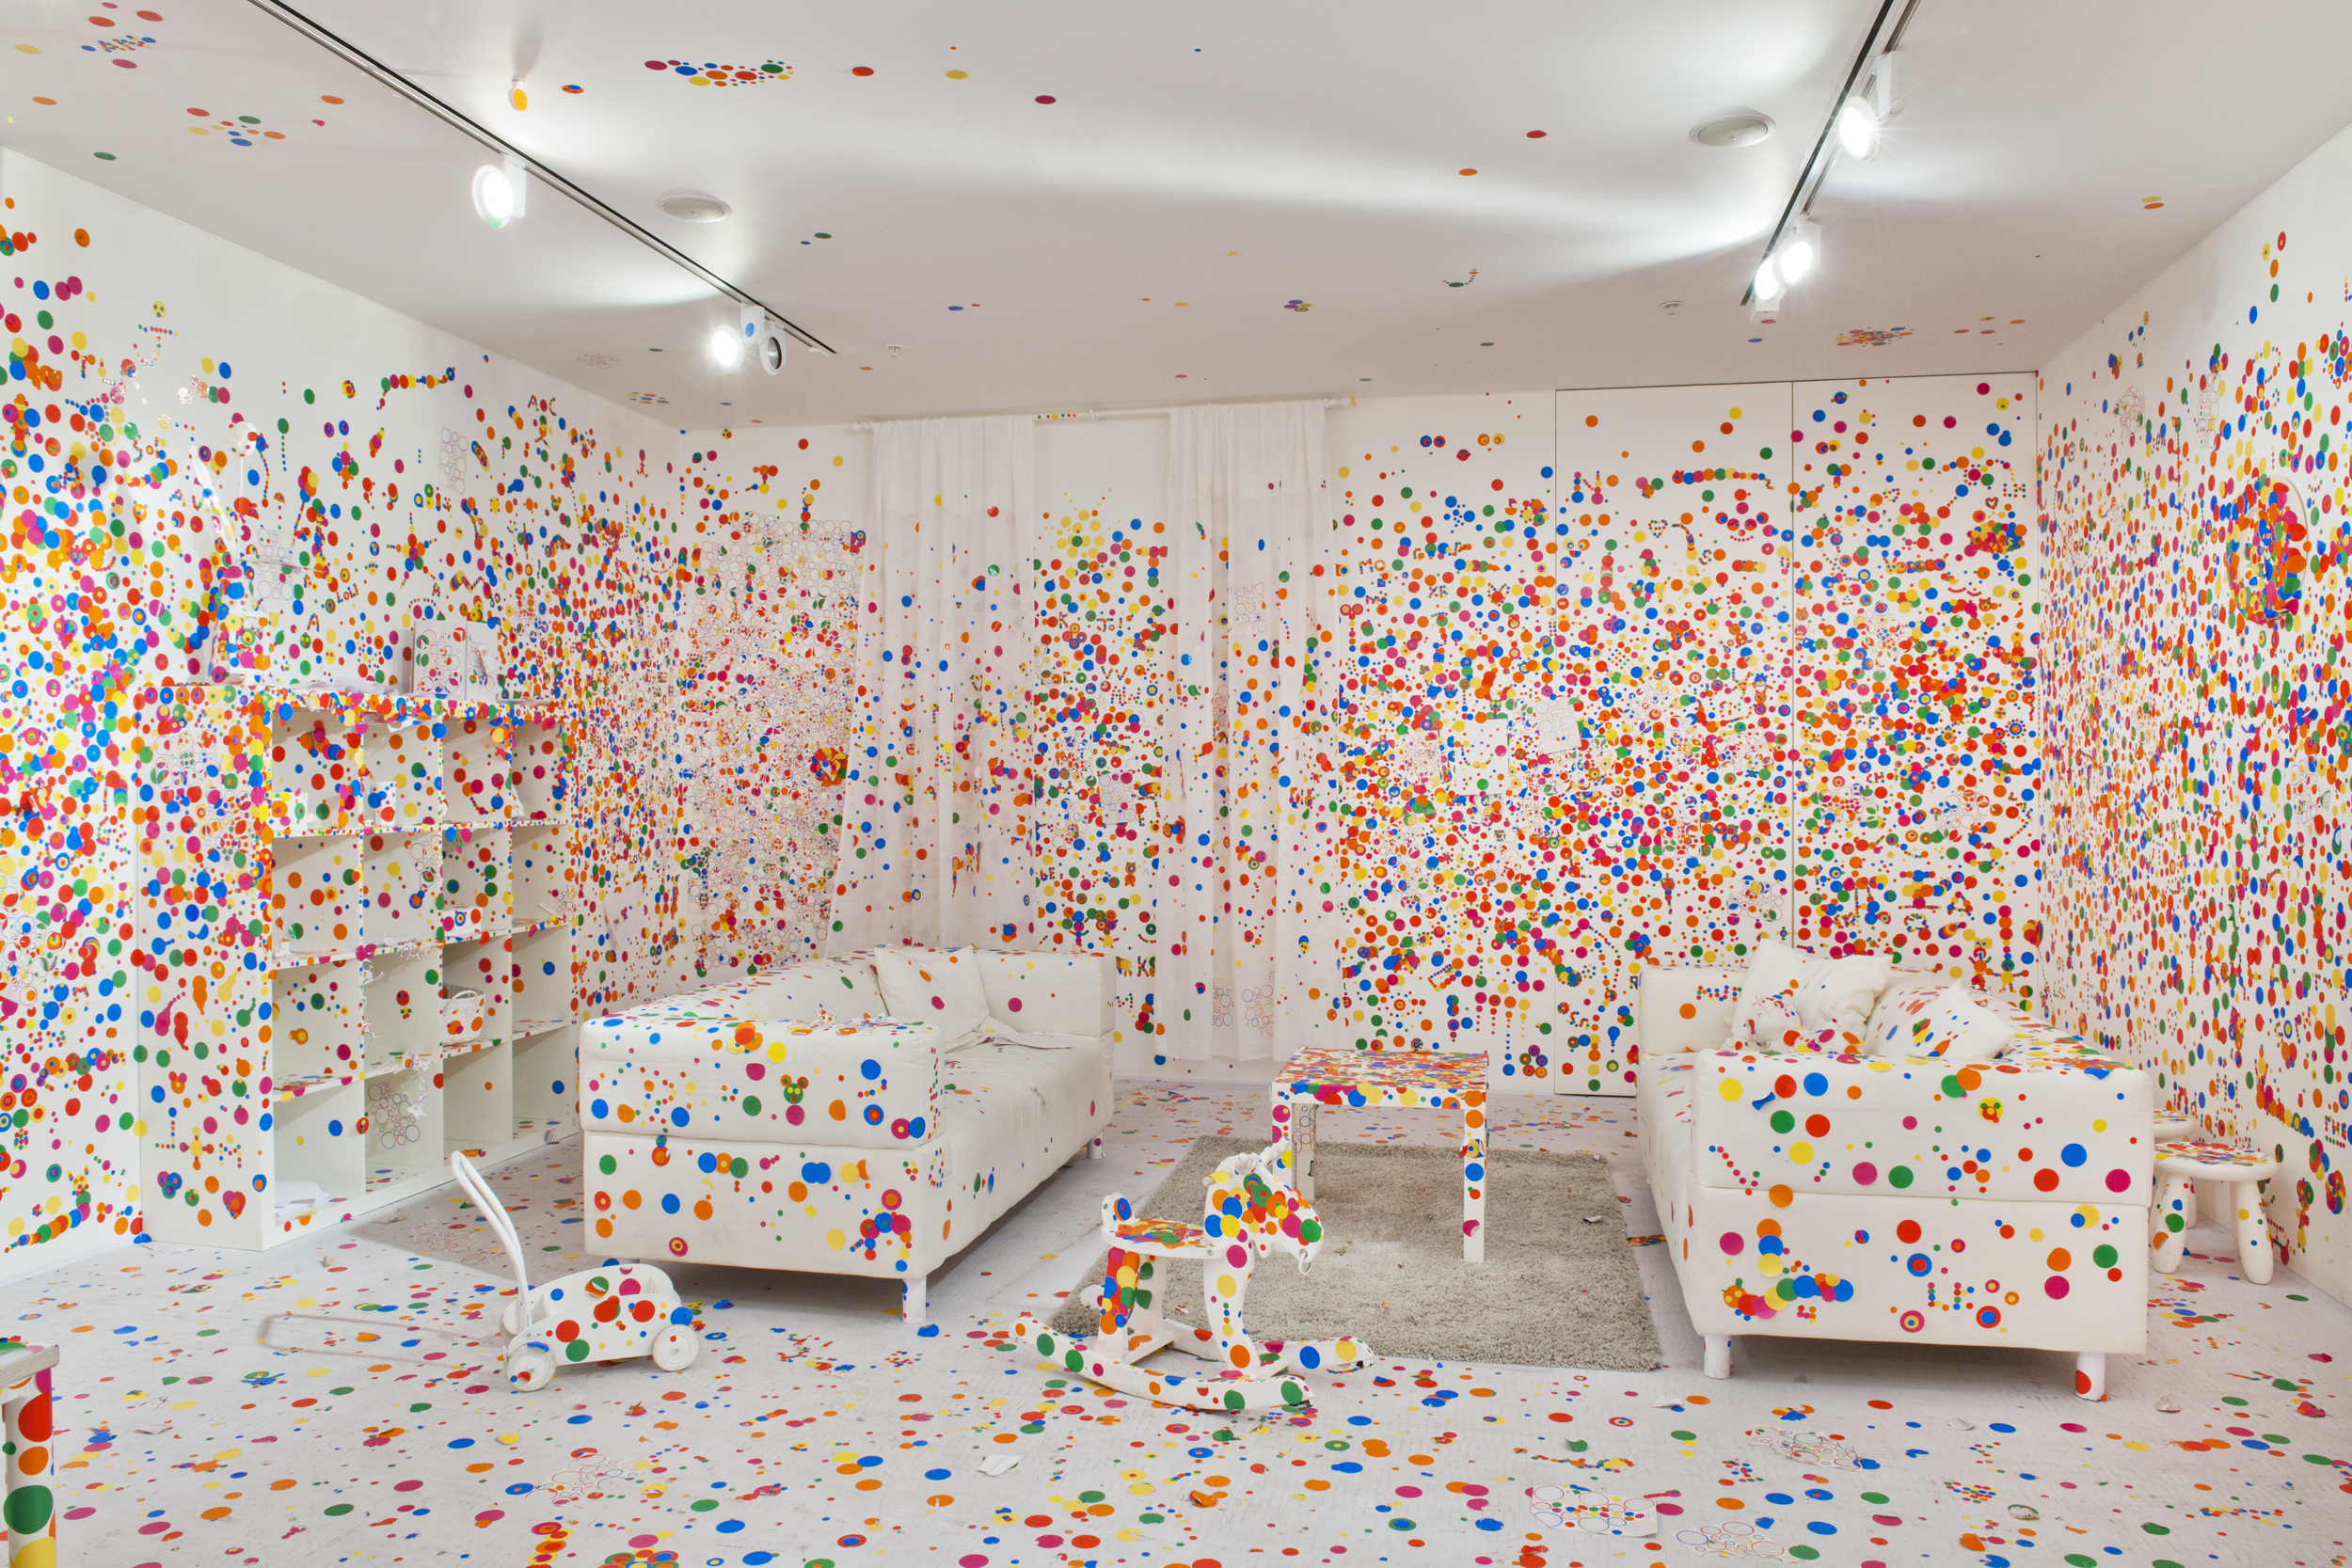 Yayoi Kusama - The Obliteration Room 2002- present at Tate Modern, 2012 (c) Tate photography